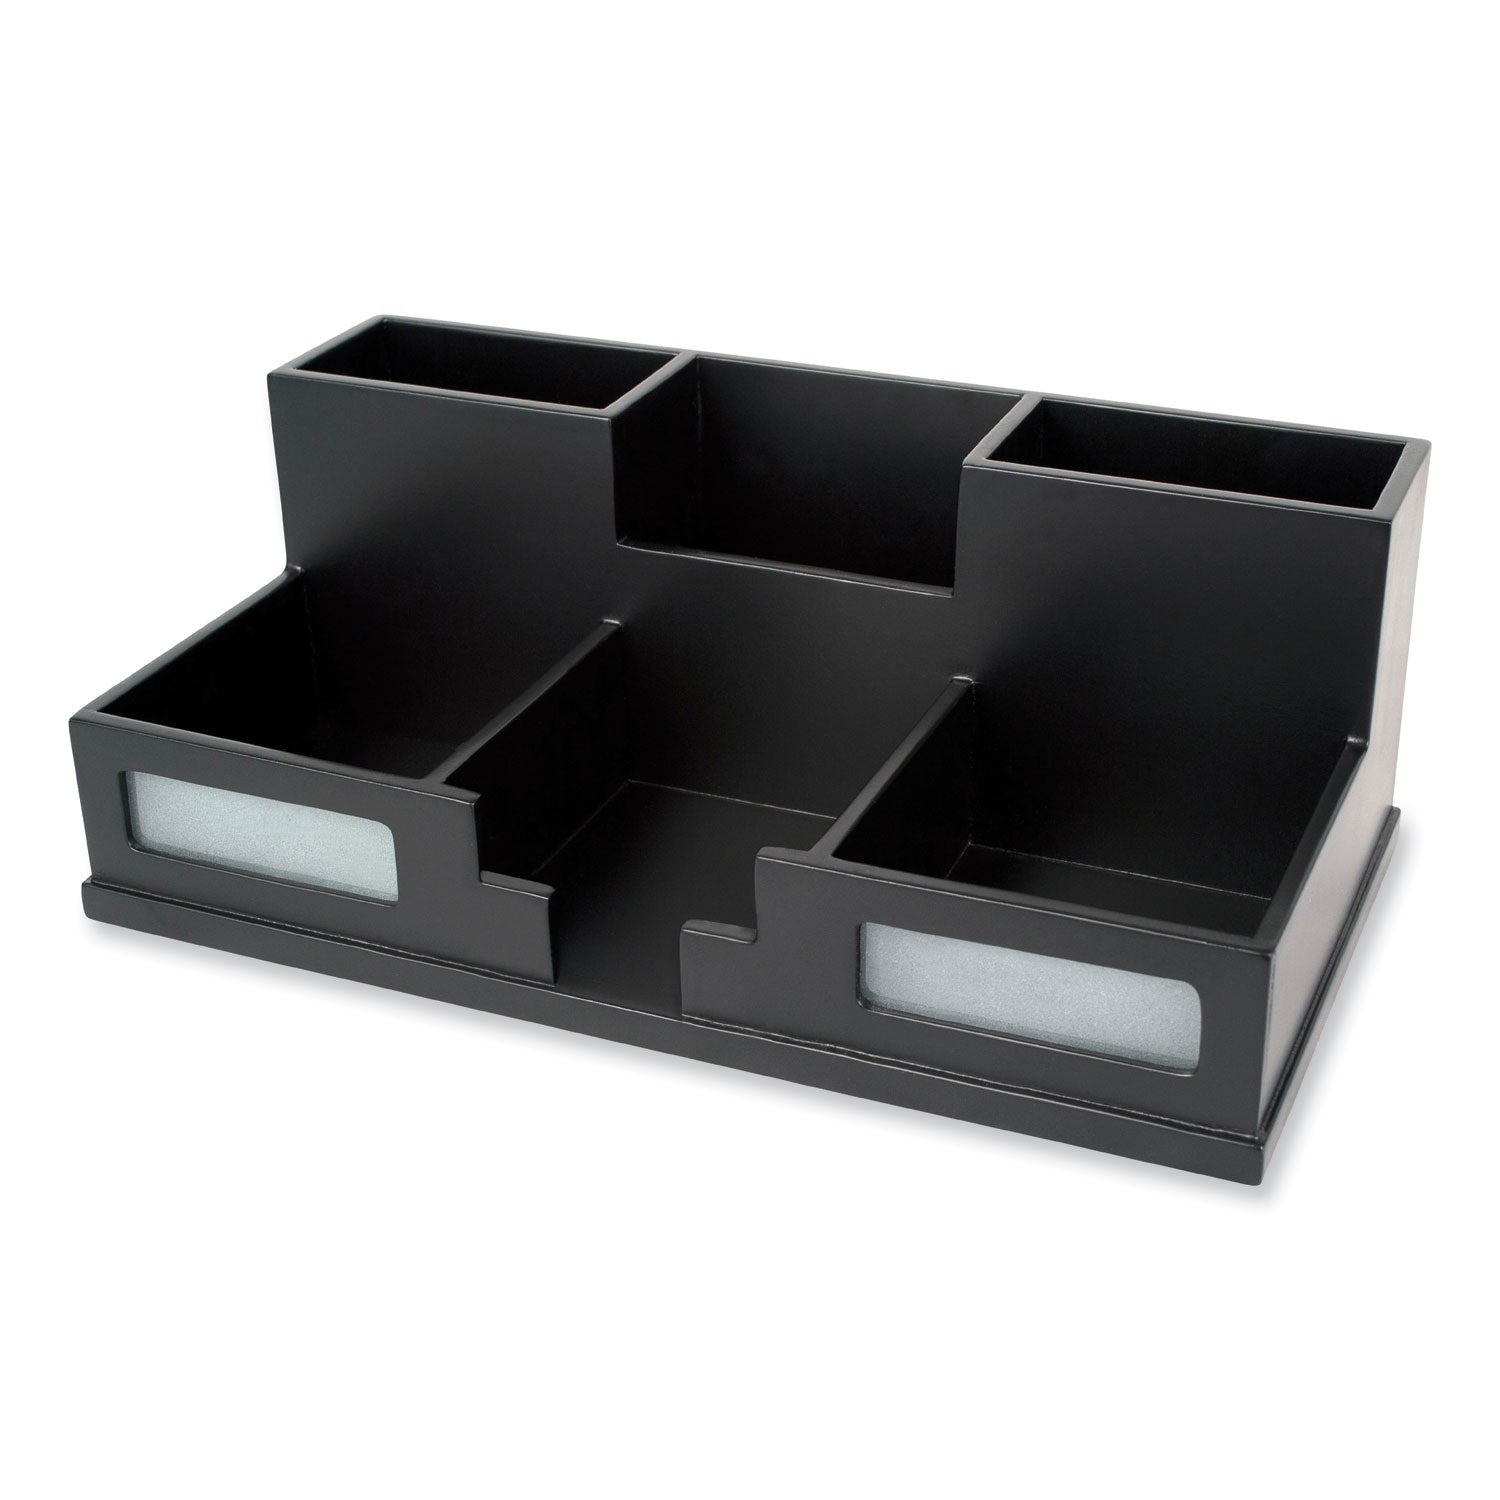 Midnight Black Desk Organizer with Smartphone Holder, 6 Compartments, Wood, 10.5 x 5.5 x 4 - 